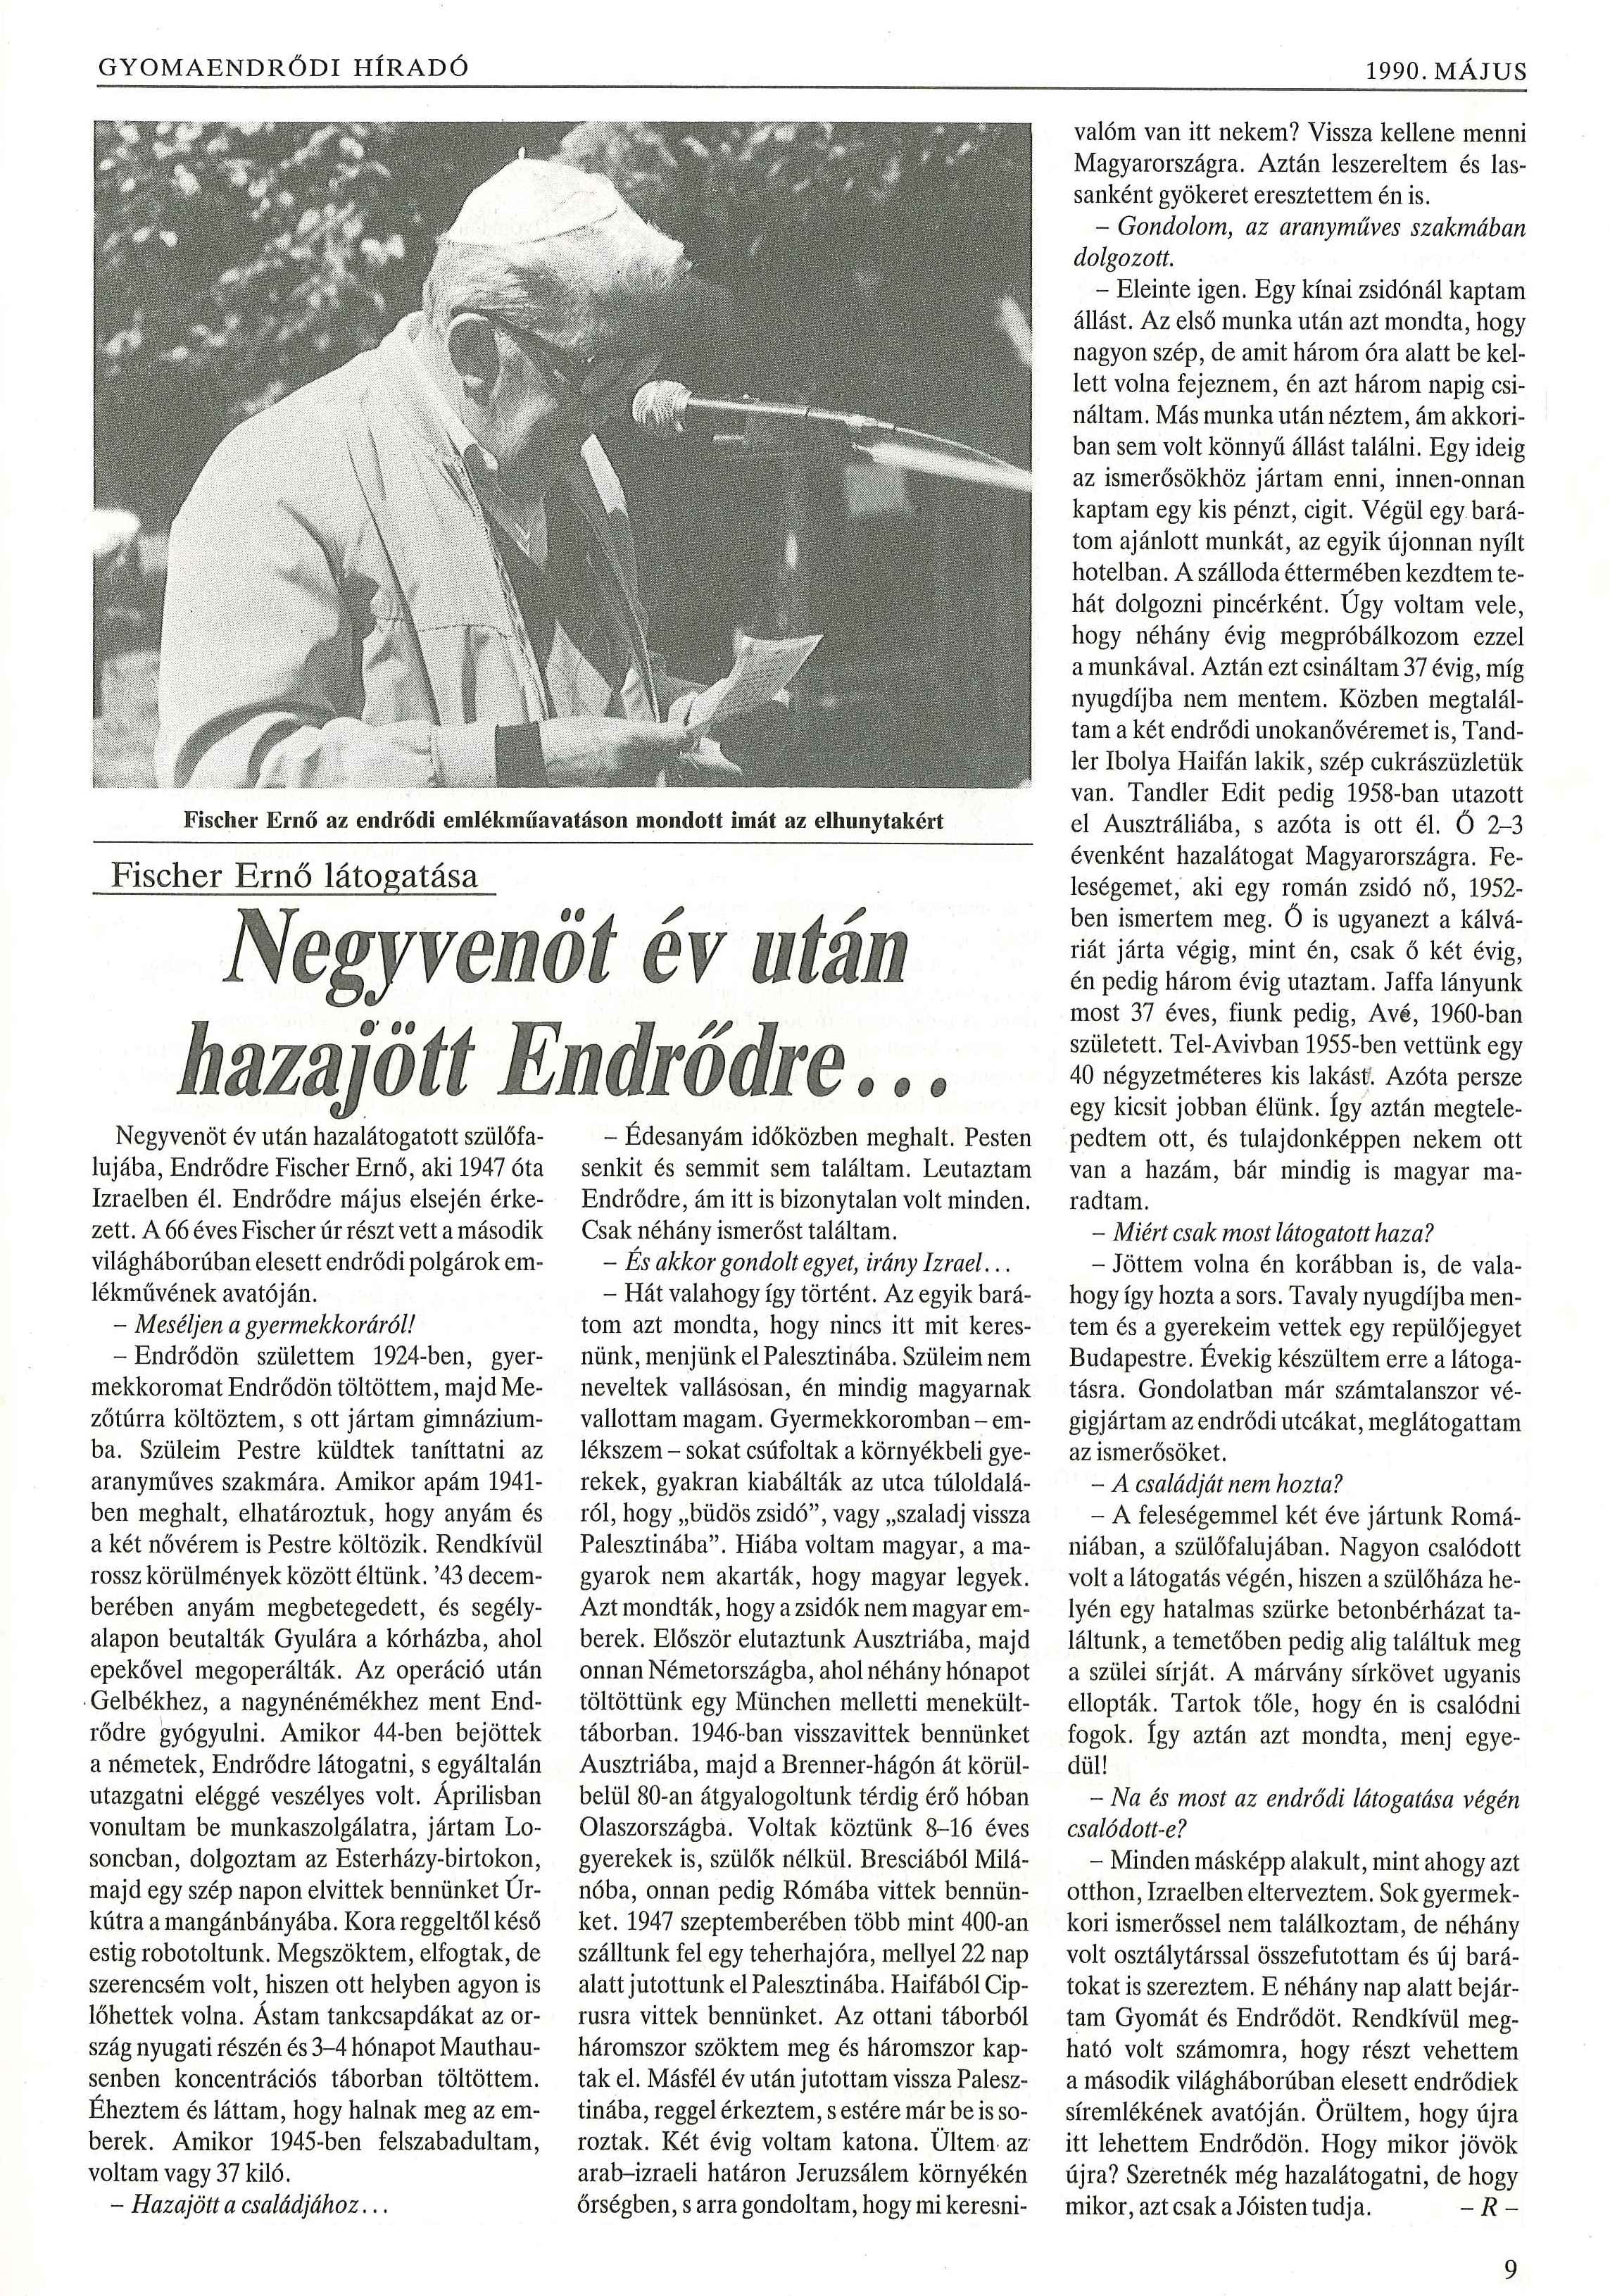 fischer erno gyhirado 1990 majus 9